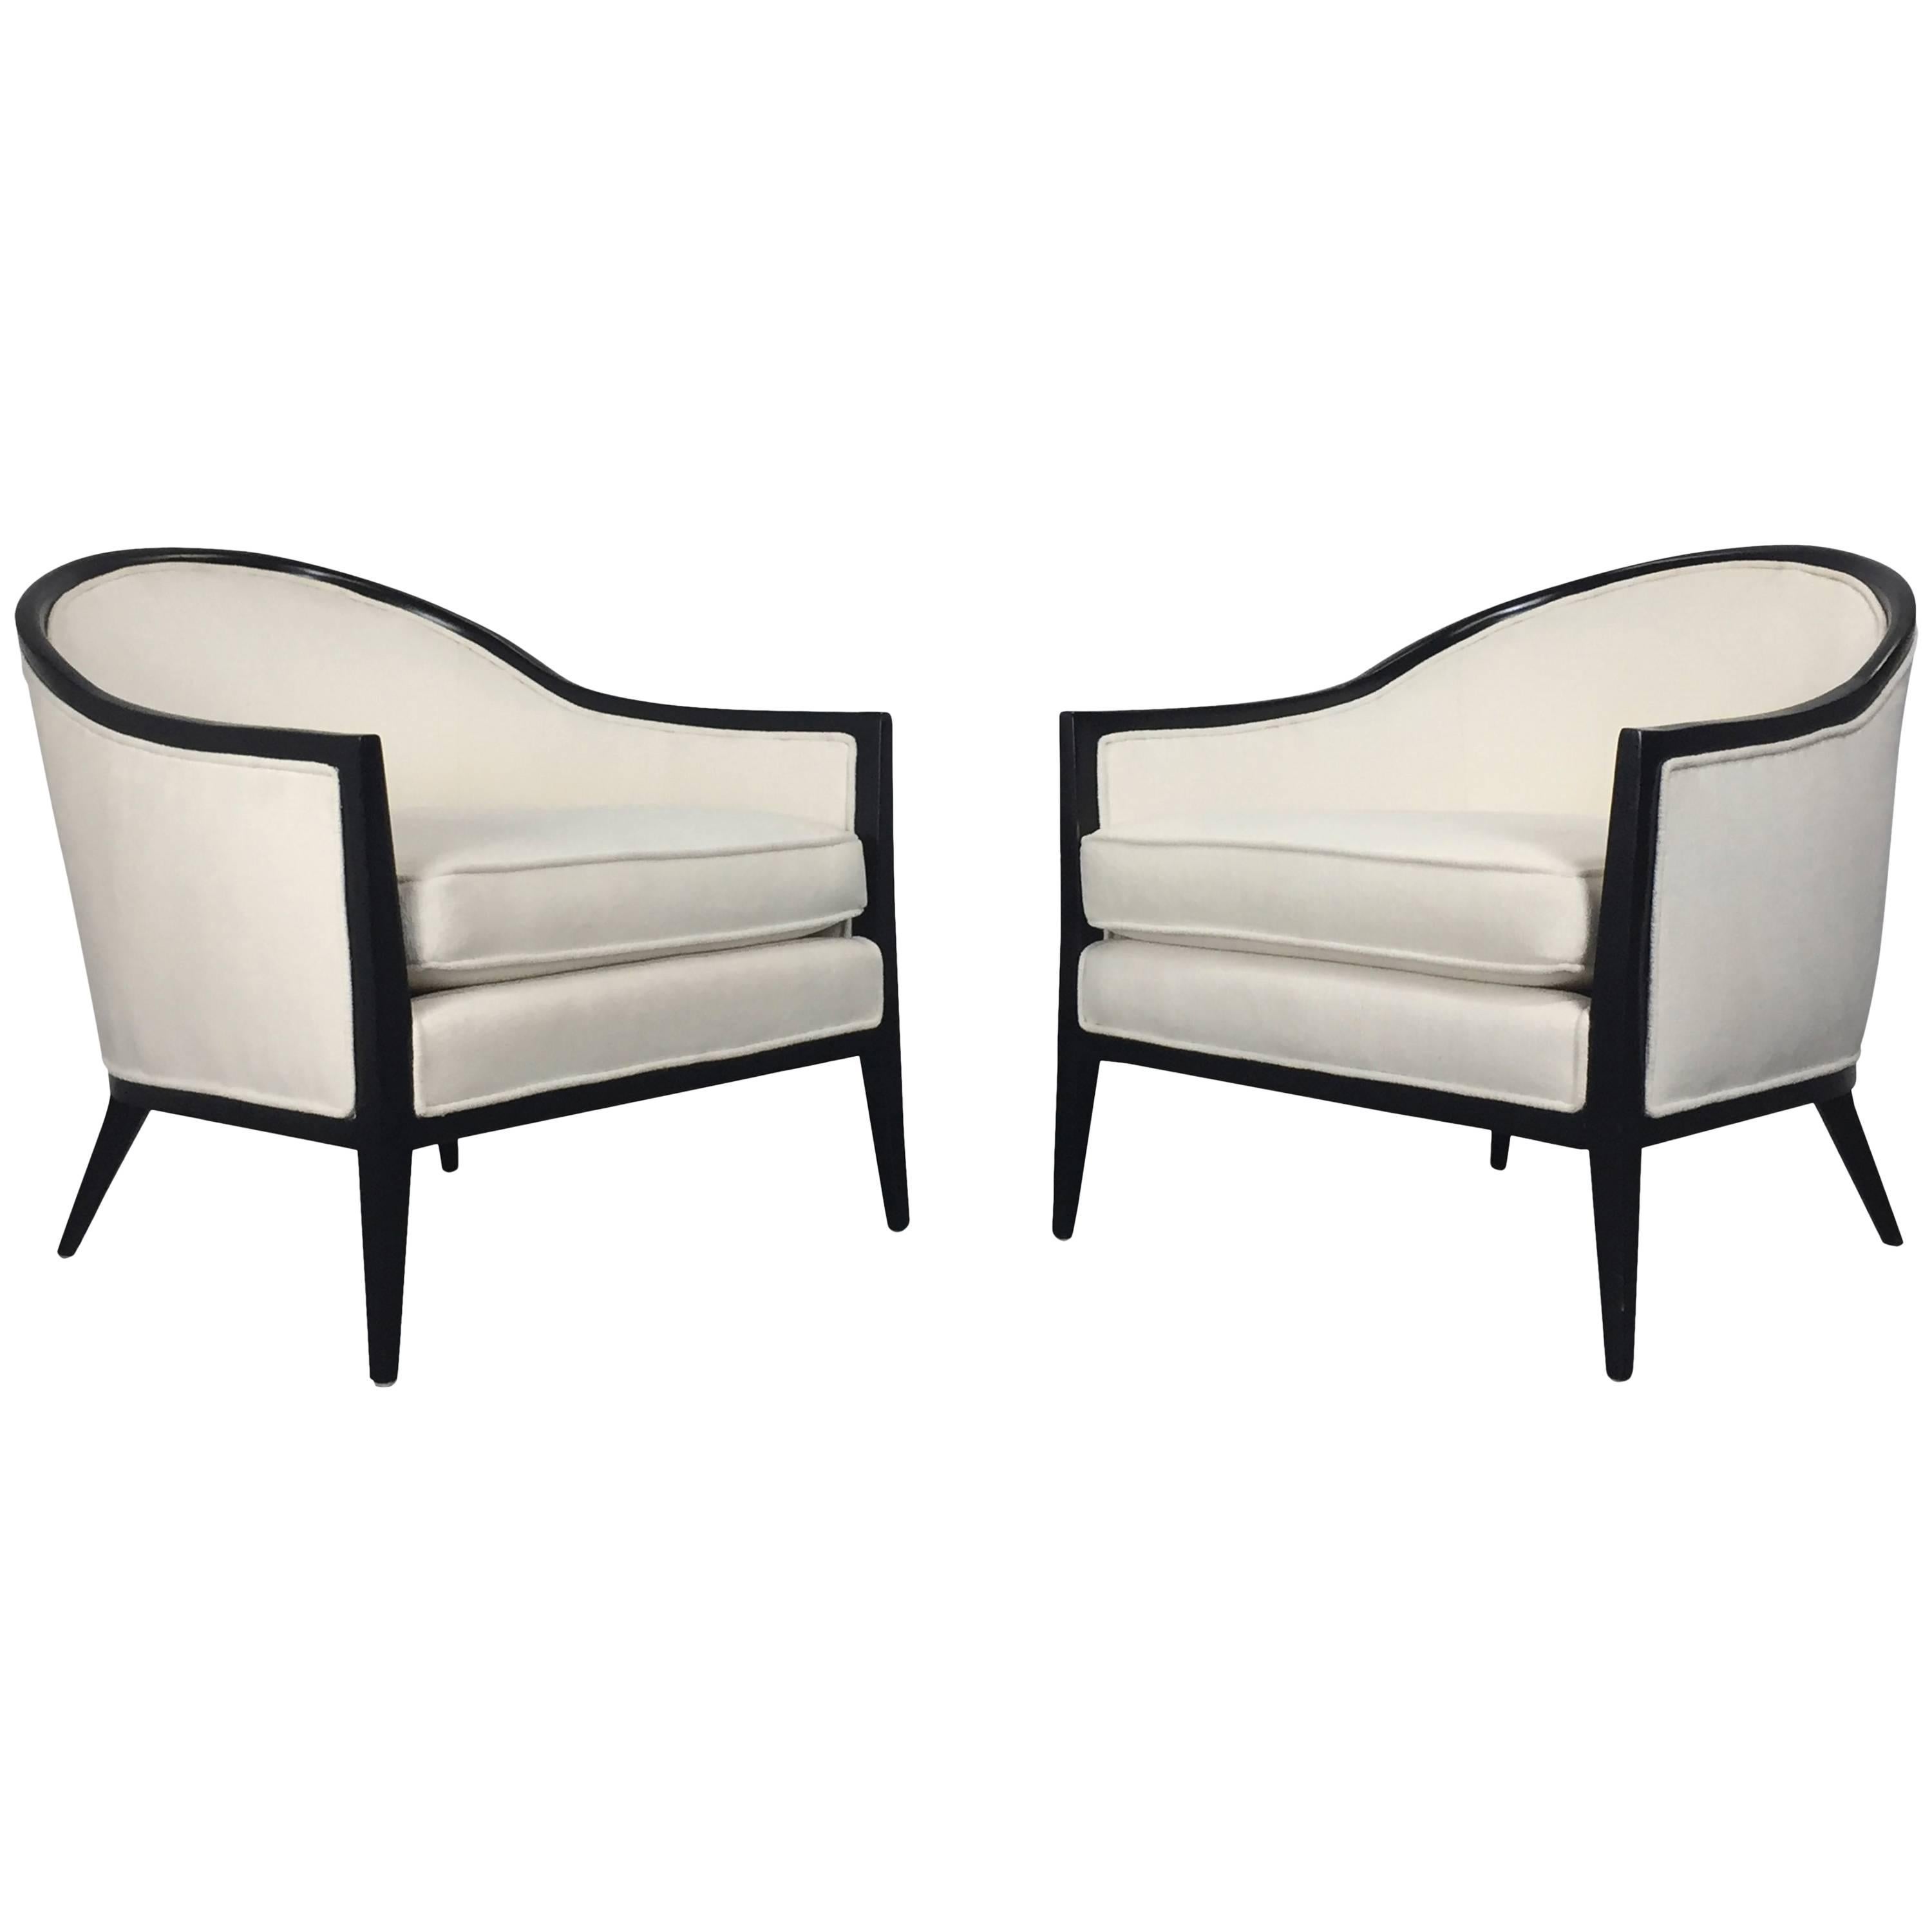 Harvey Probber Ebonized Lounge Chairs, a Pair